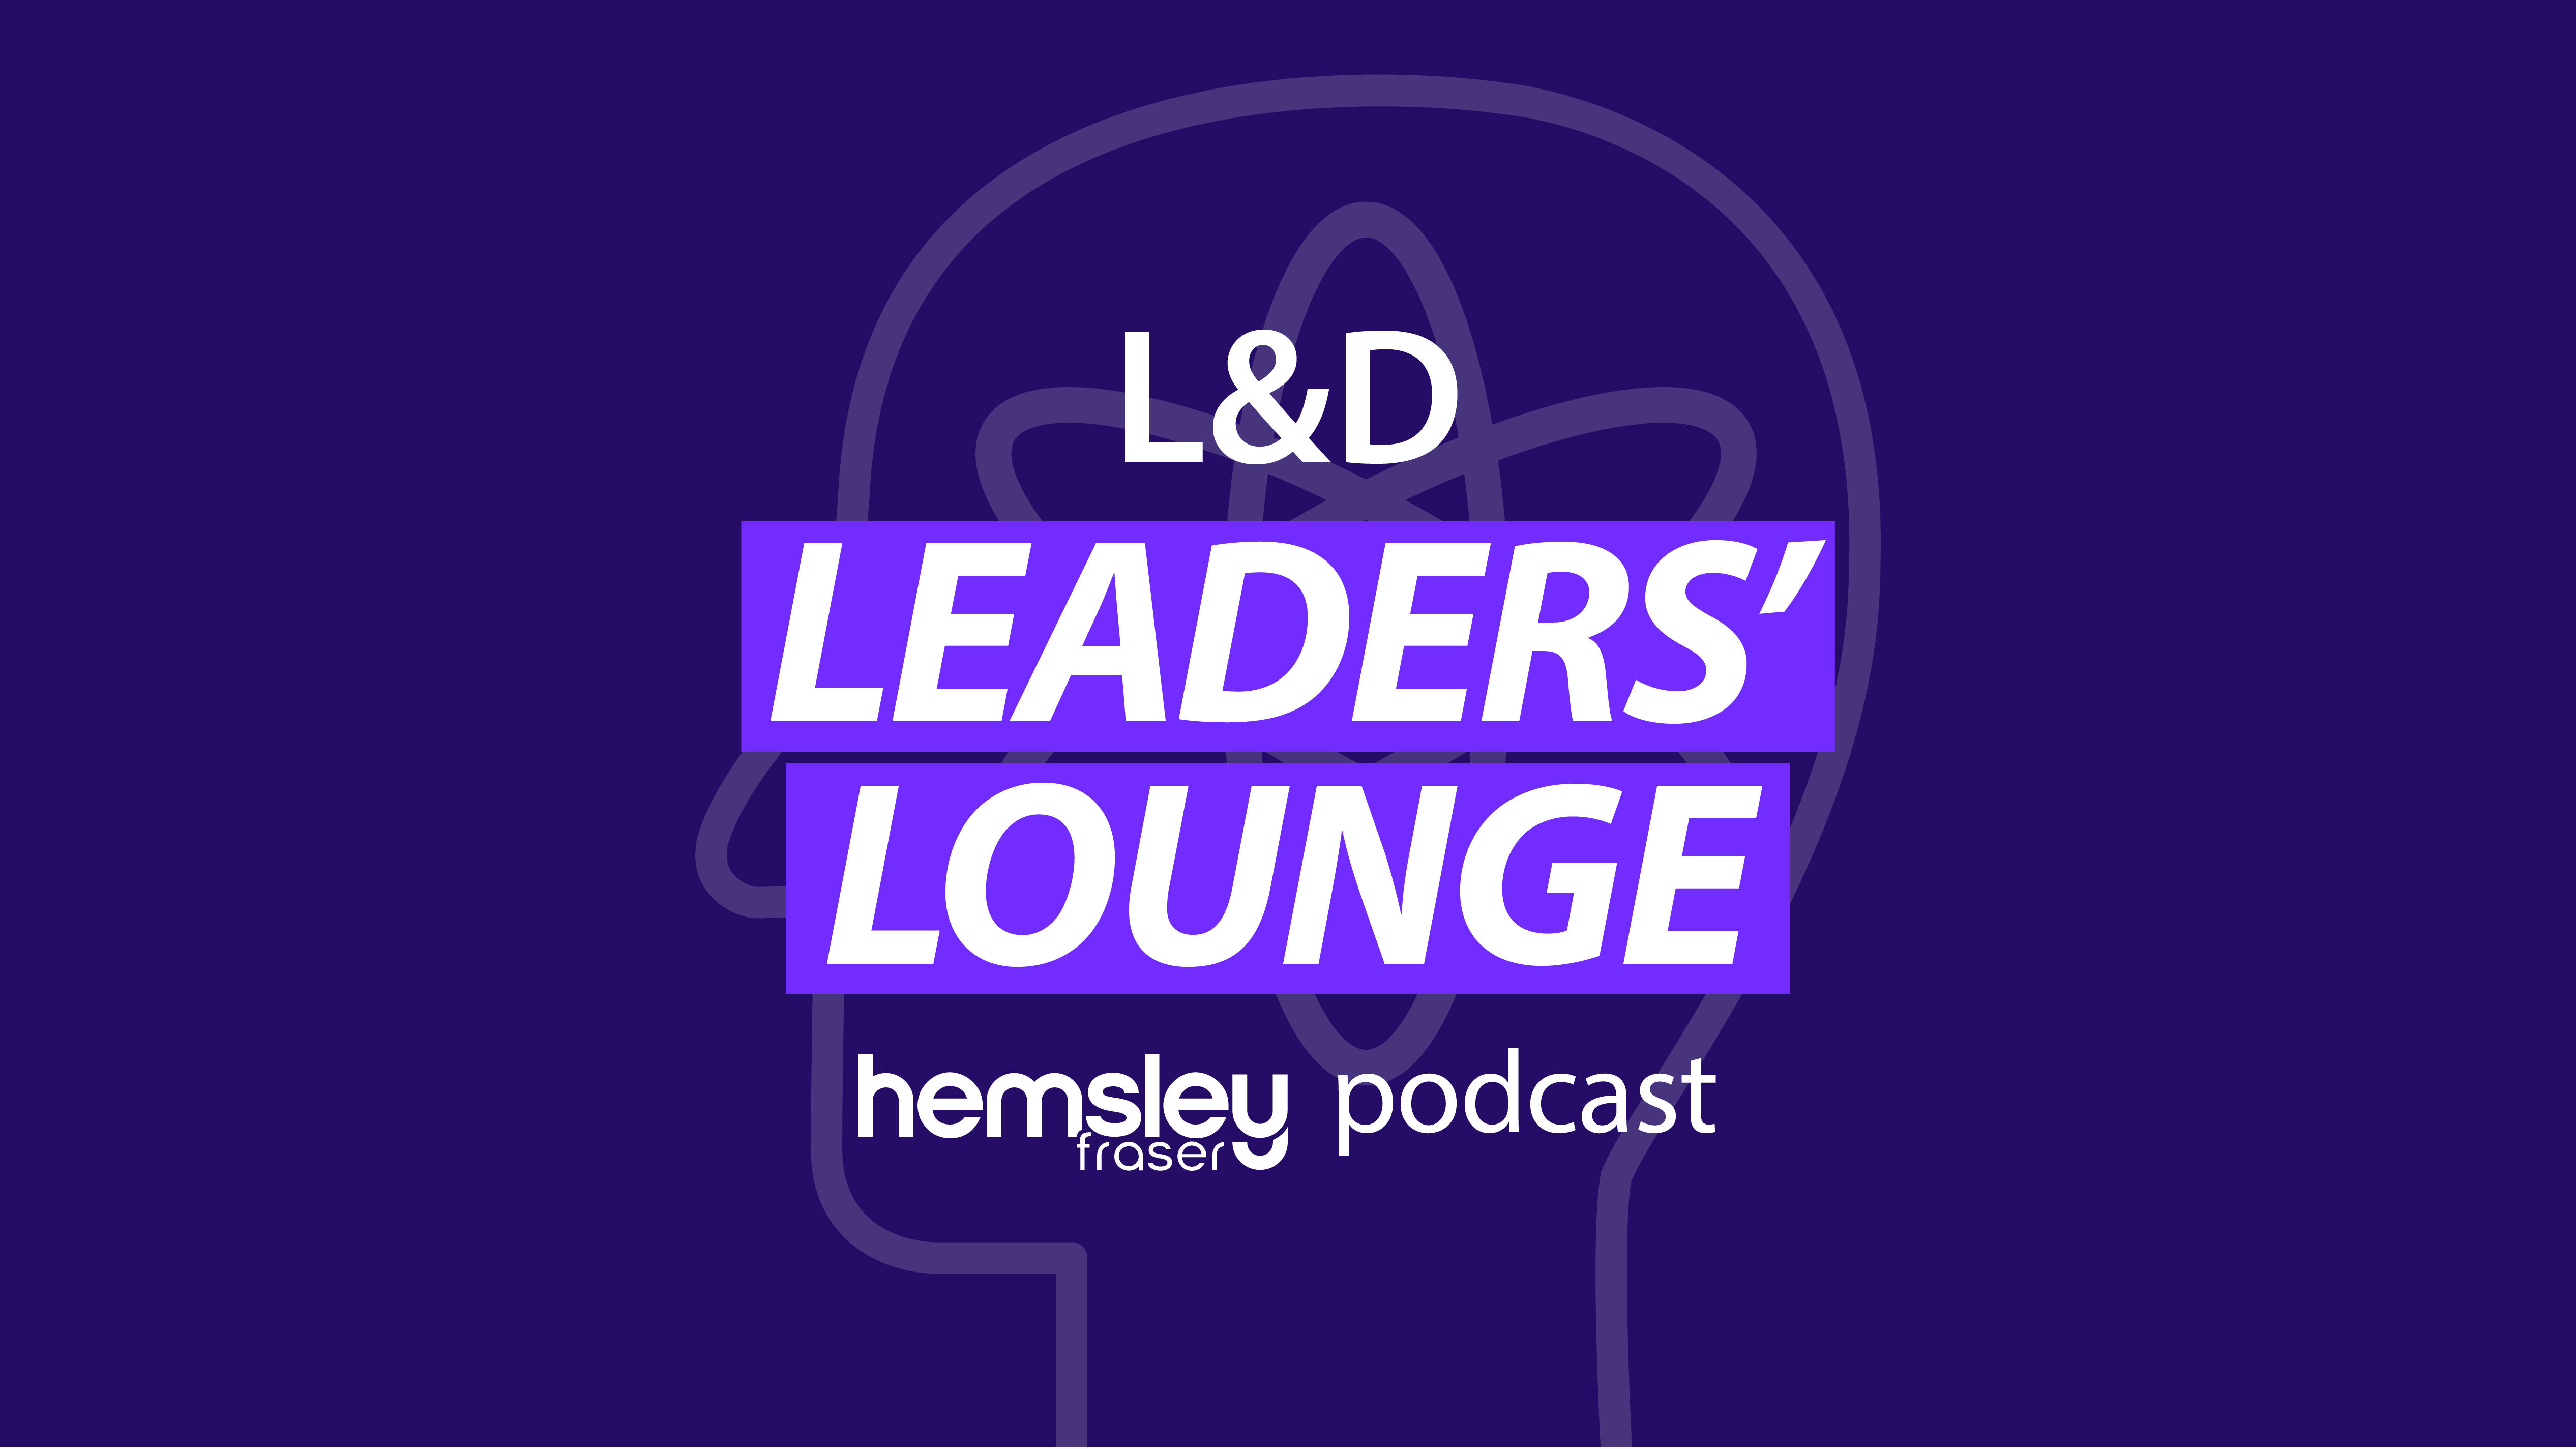 L&D Leaders' Lounge